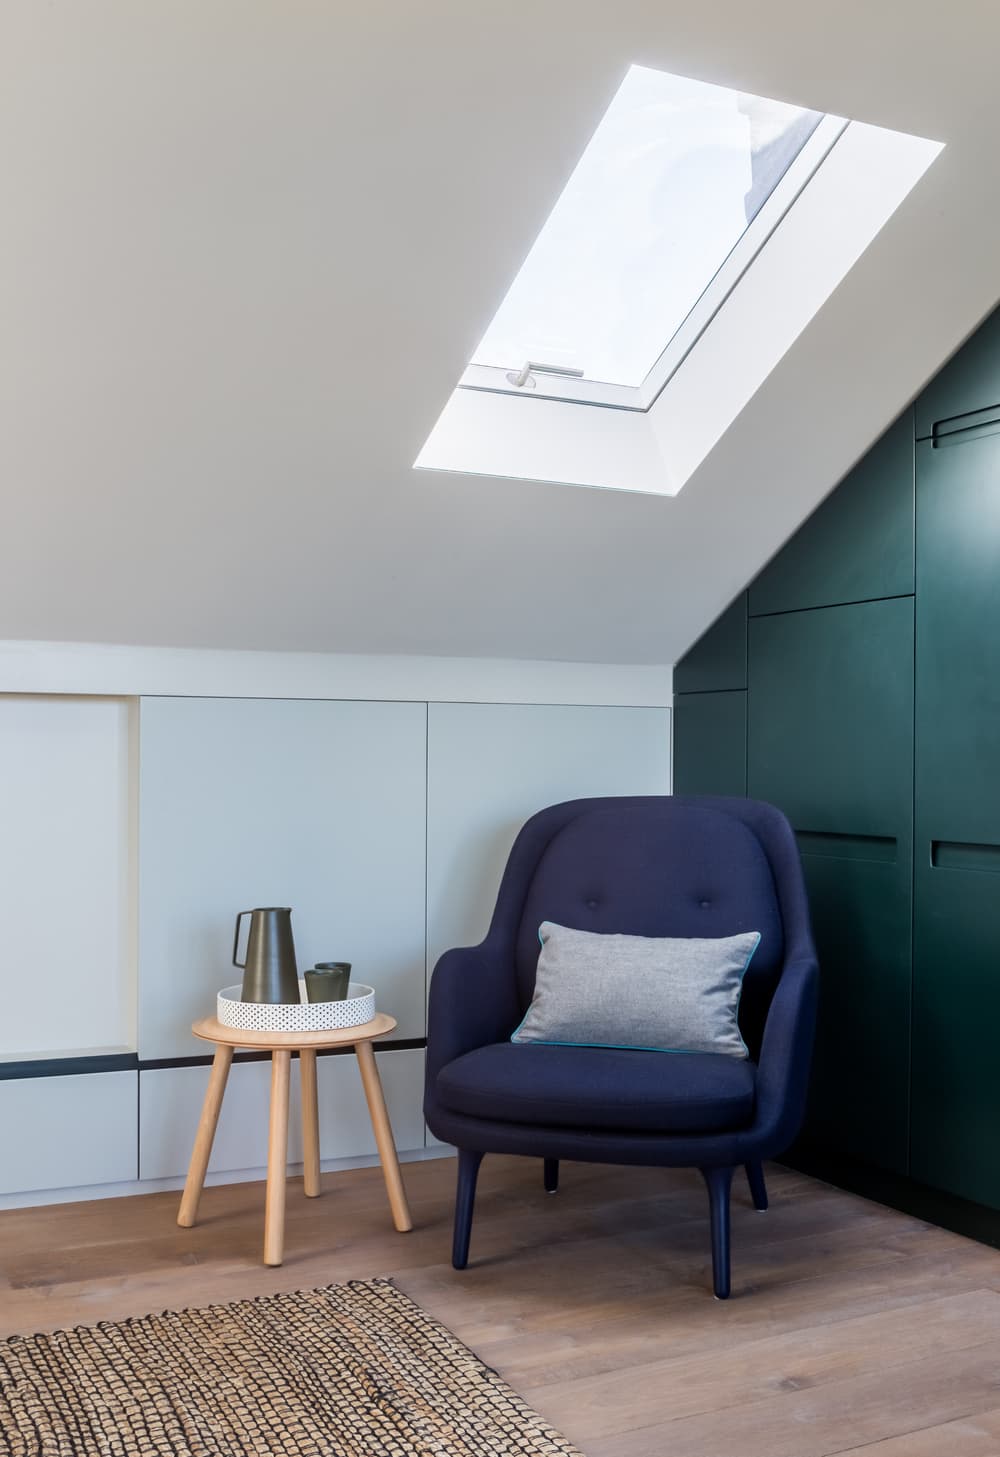 TR Studio Convert London Terraced House into High-End Contemporary Rental Apartments